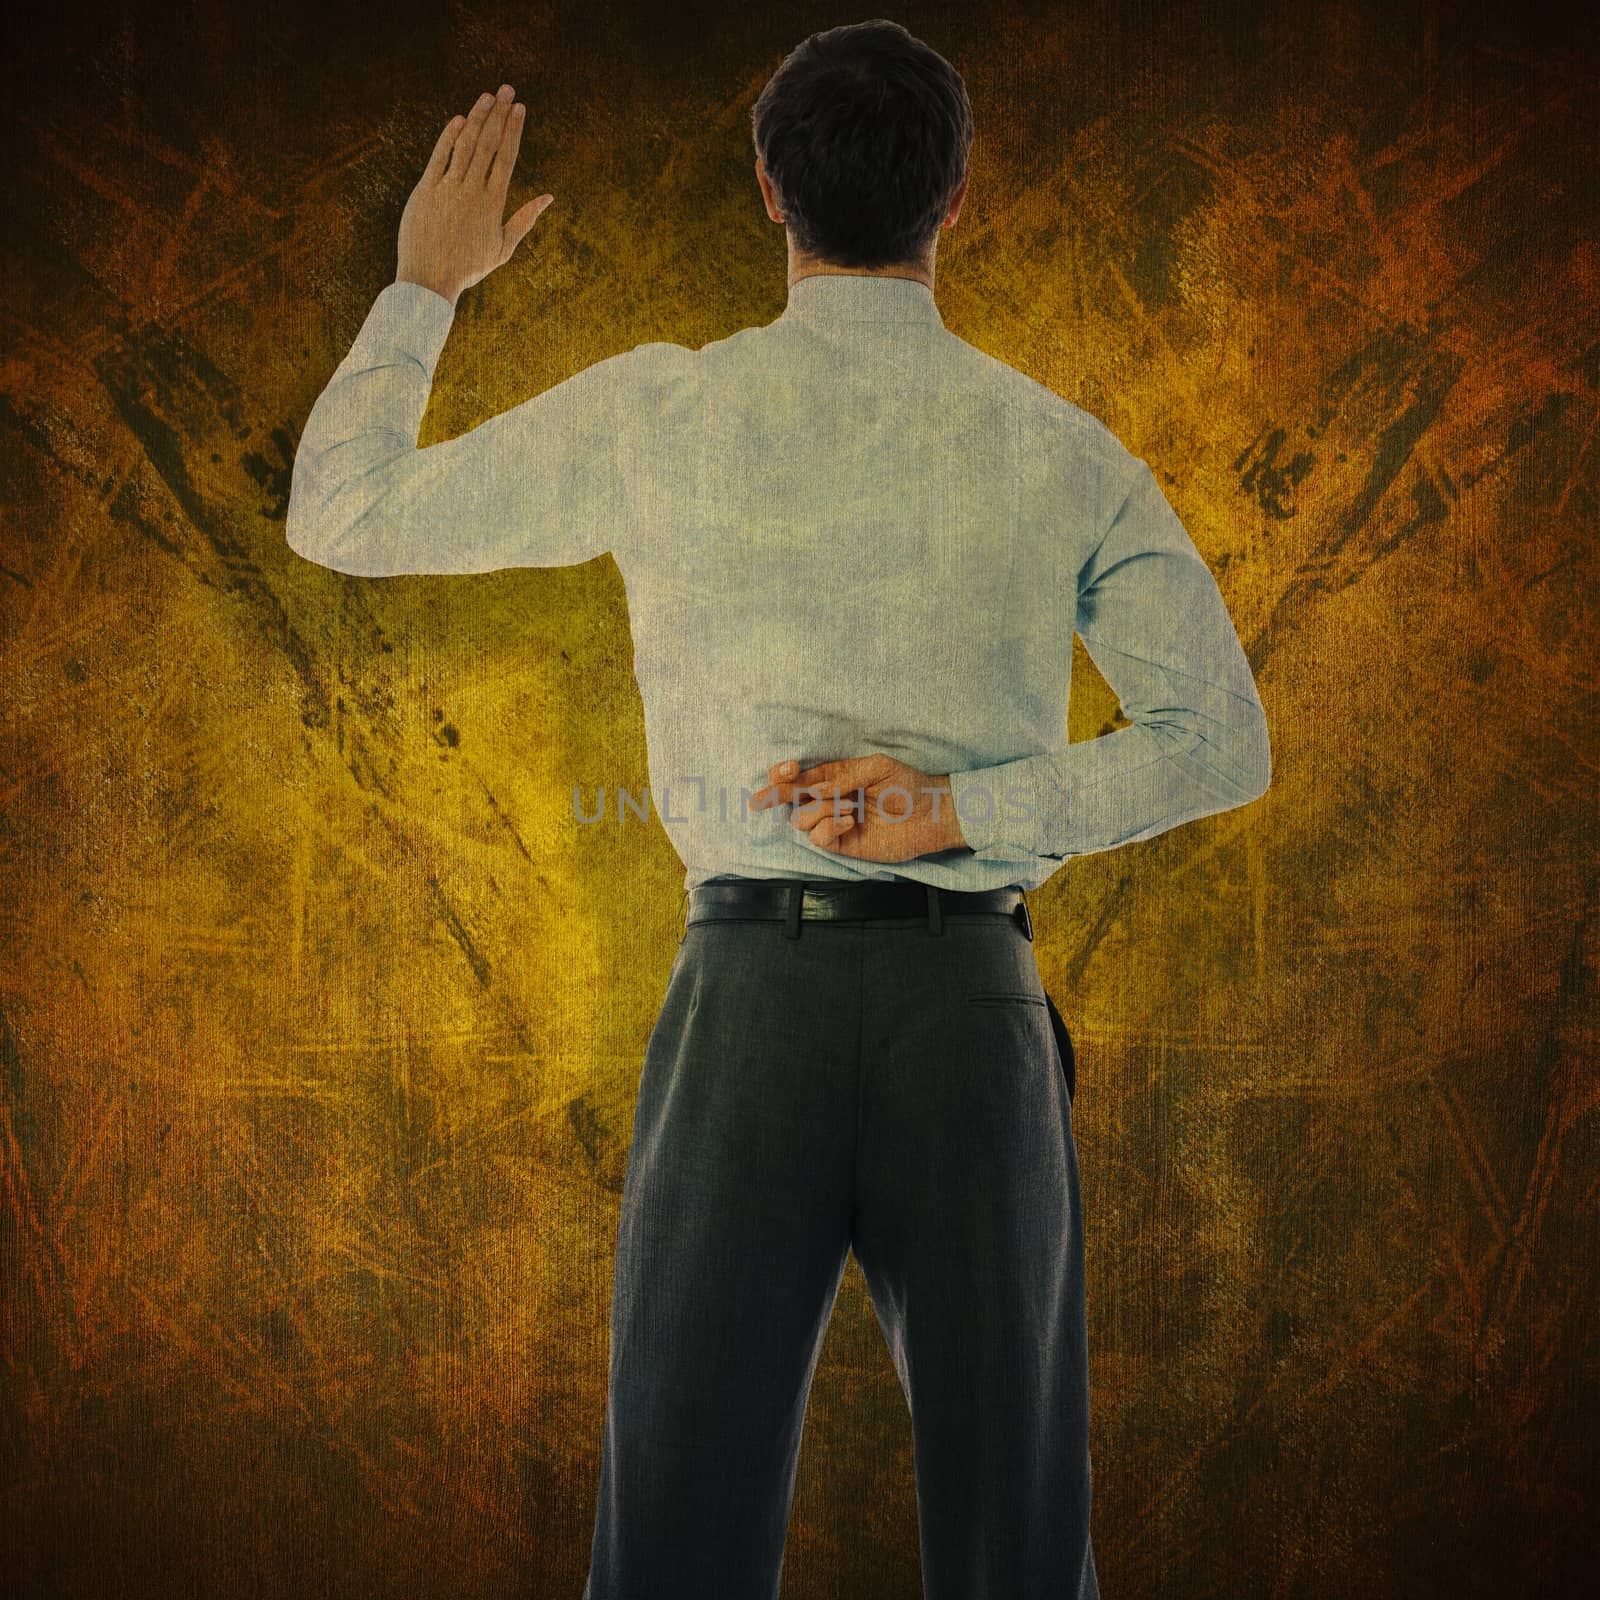 Businessman crossing fingers behind his back against dark background